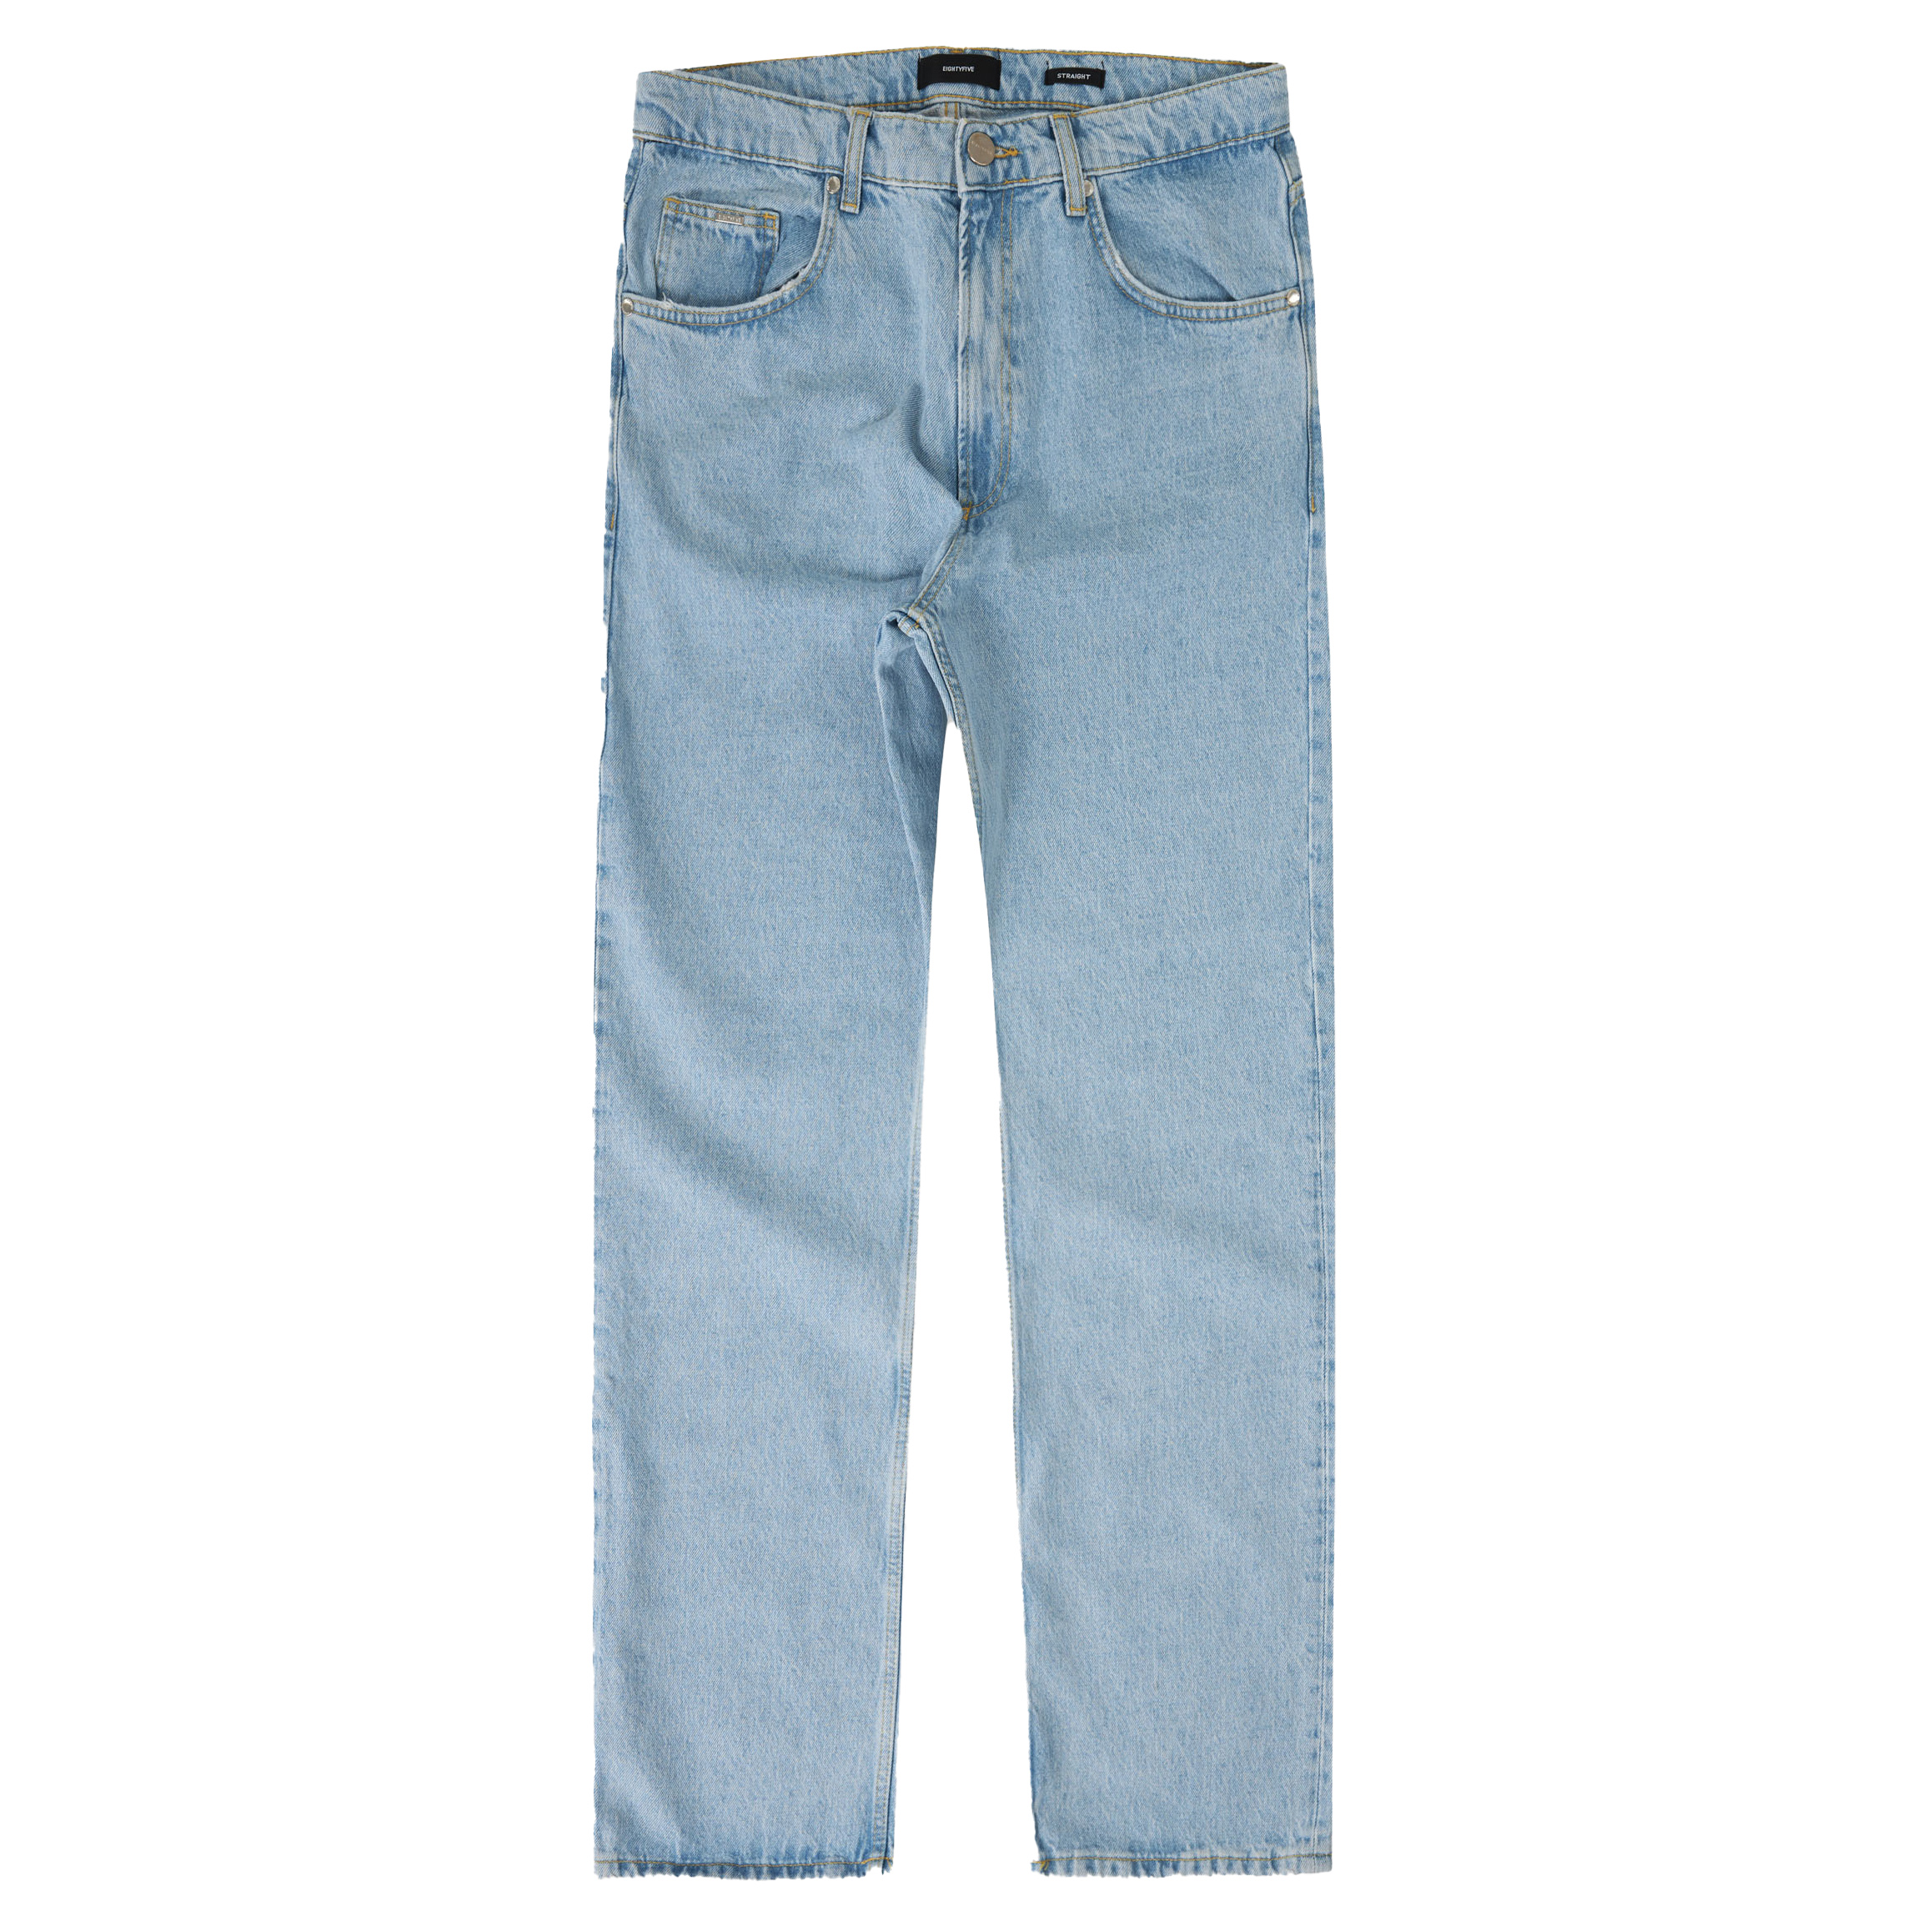 Eightyfive Distressed Jeans, Vintage Blue